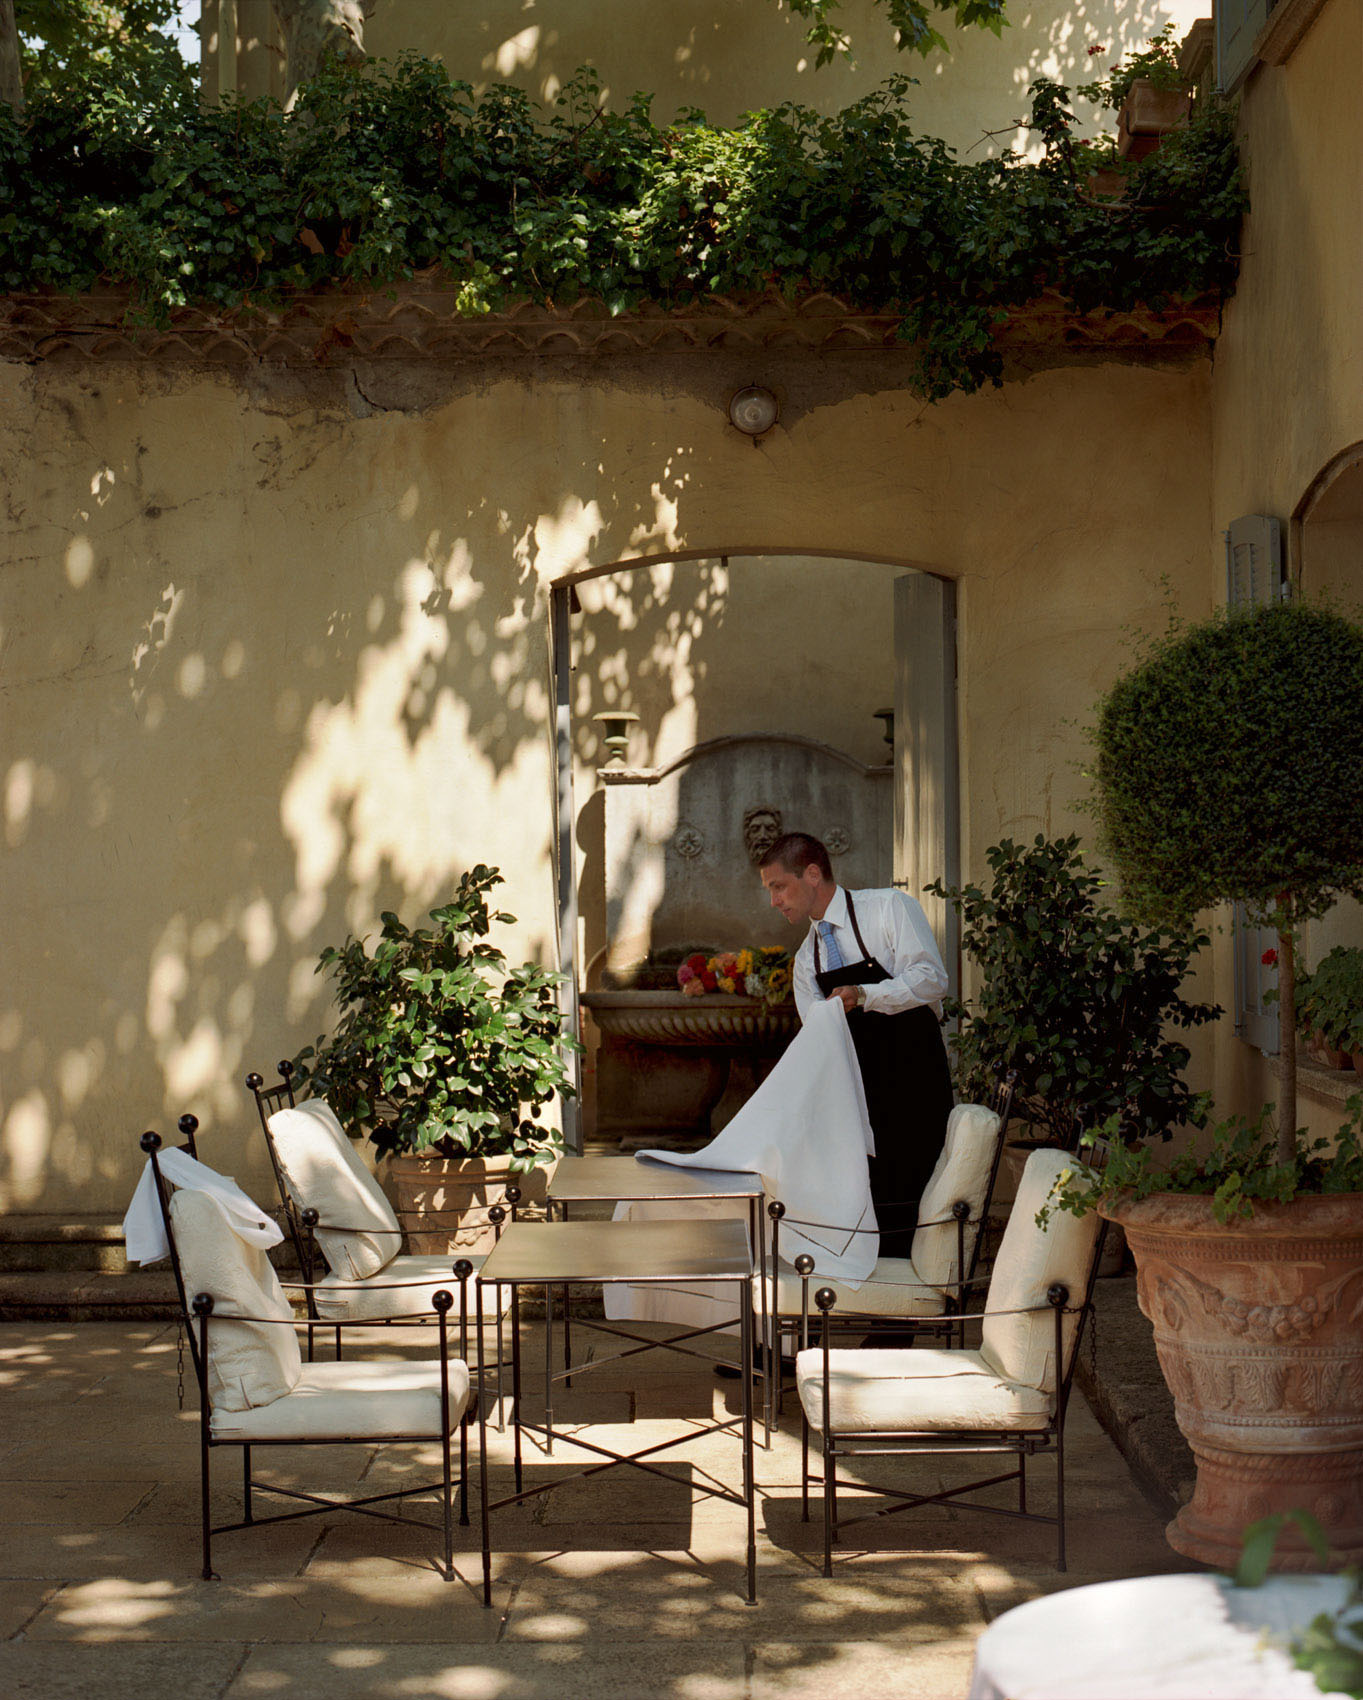 O18-160 waiter setting table at Villa Gallici